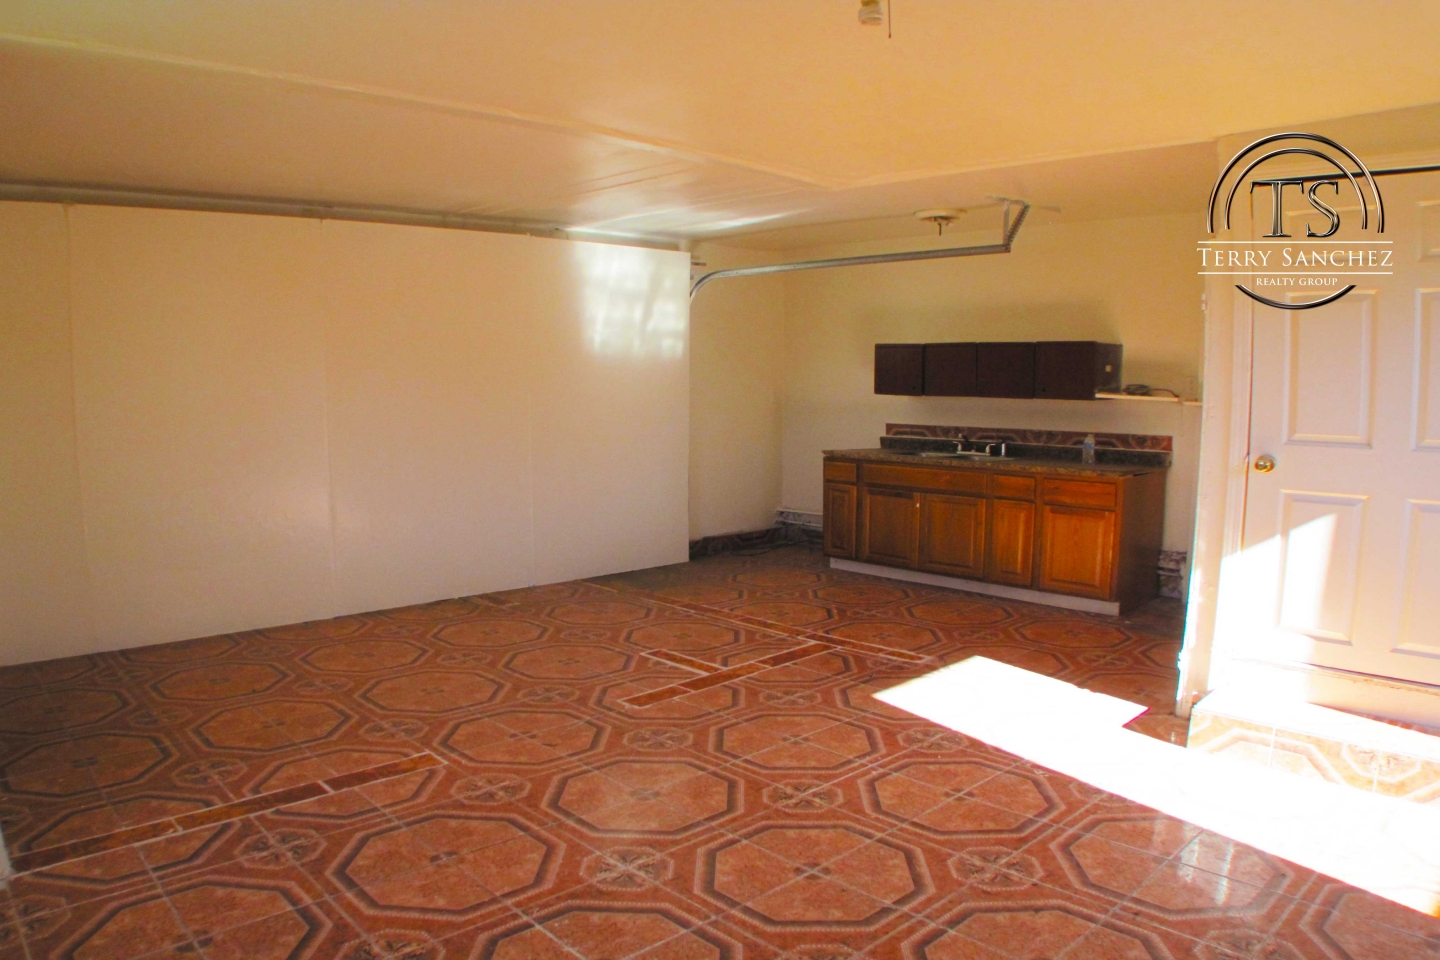 HOME FOR SALE IN SAN BERNARDINO CA 92407 BY REAL ESTATE BROKER TERRY SANCHEZ $260,000 WITH 4 BEDROOMS 2 BATHROOMS